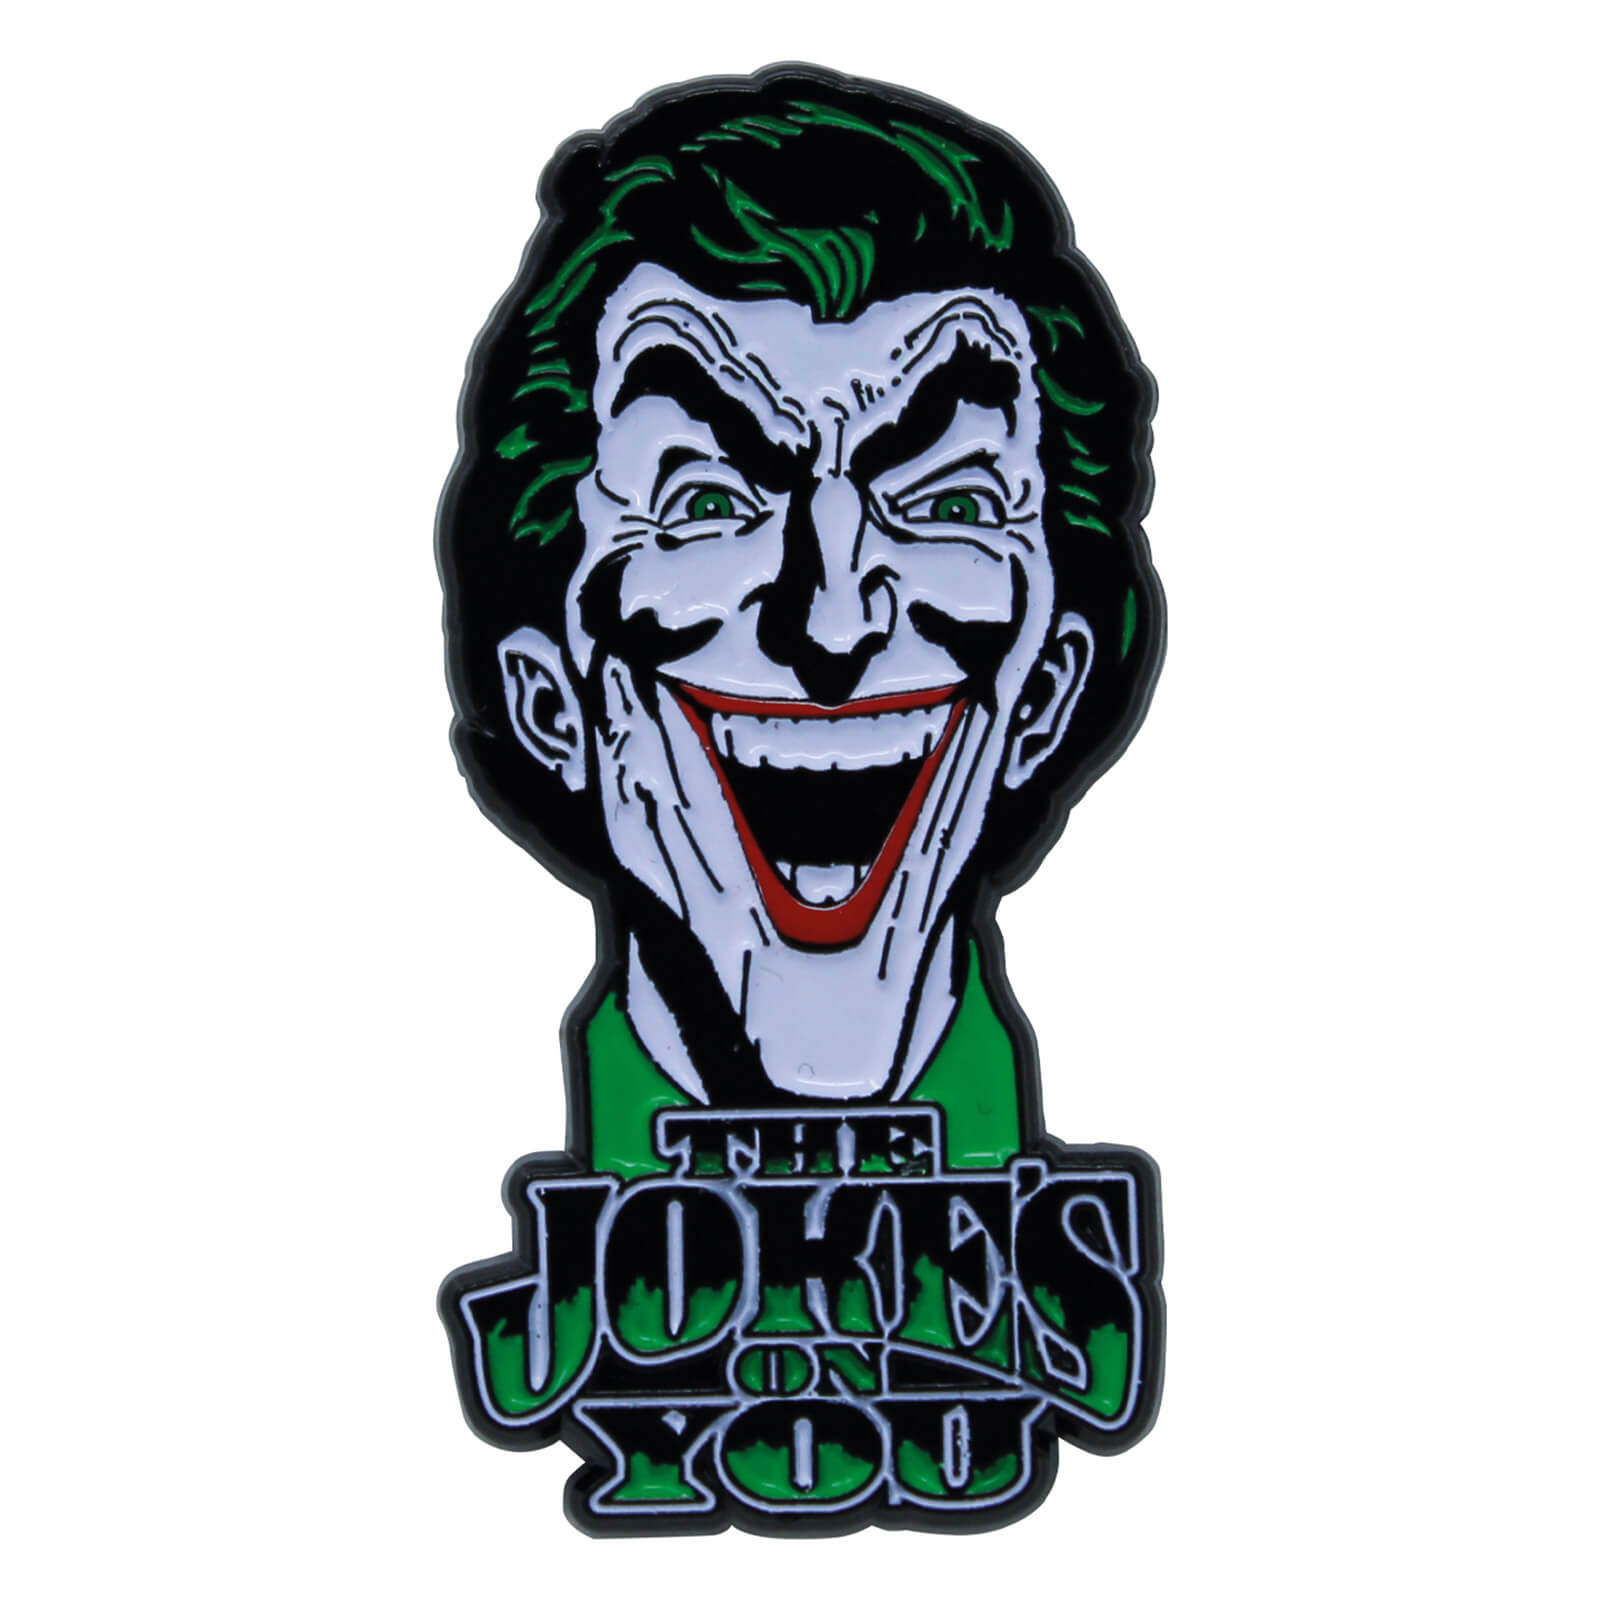 DUST DC Comics Limited Edition Joker Pin Badge